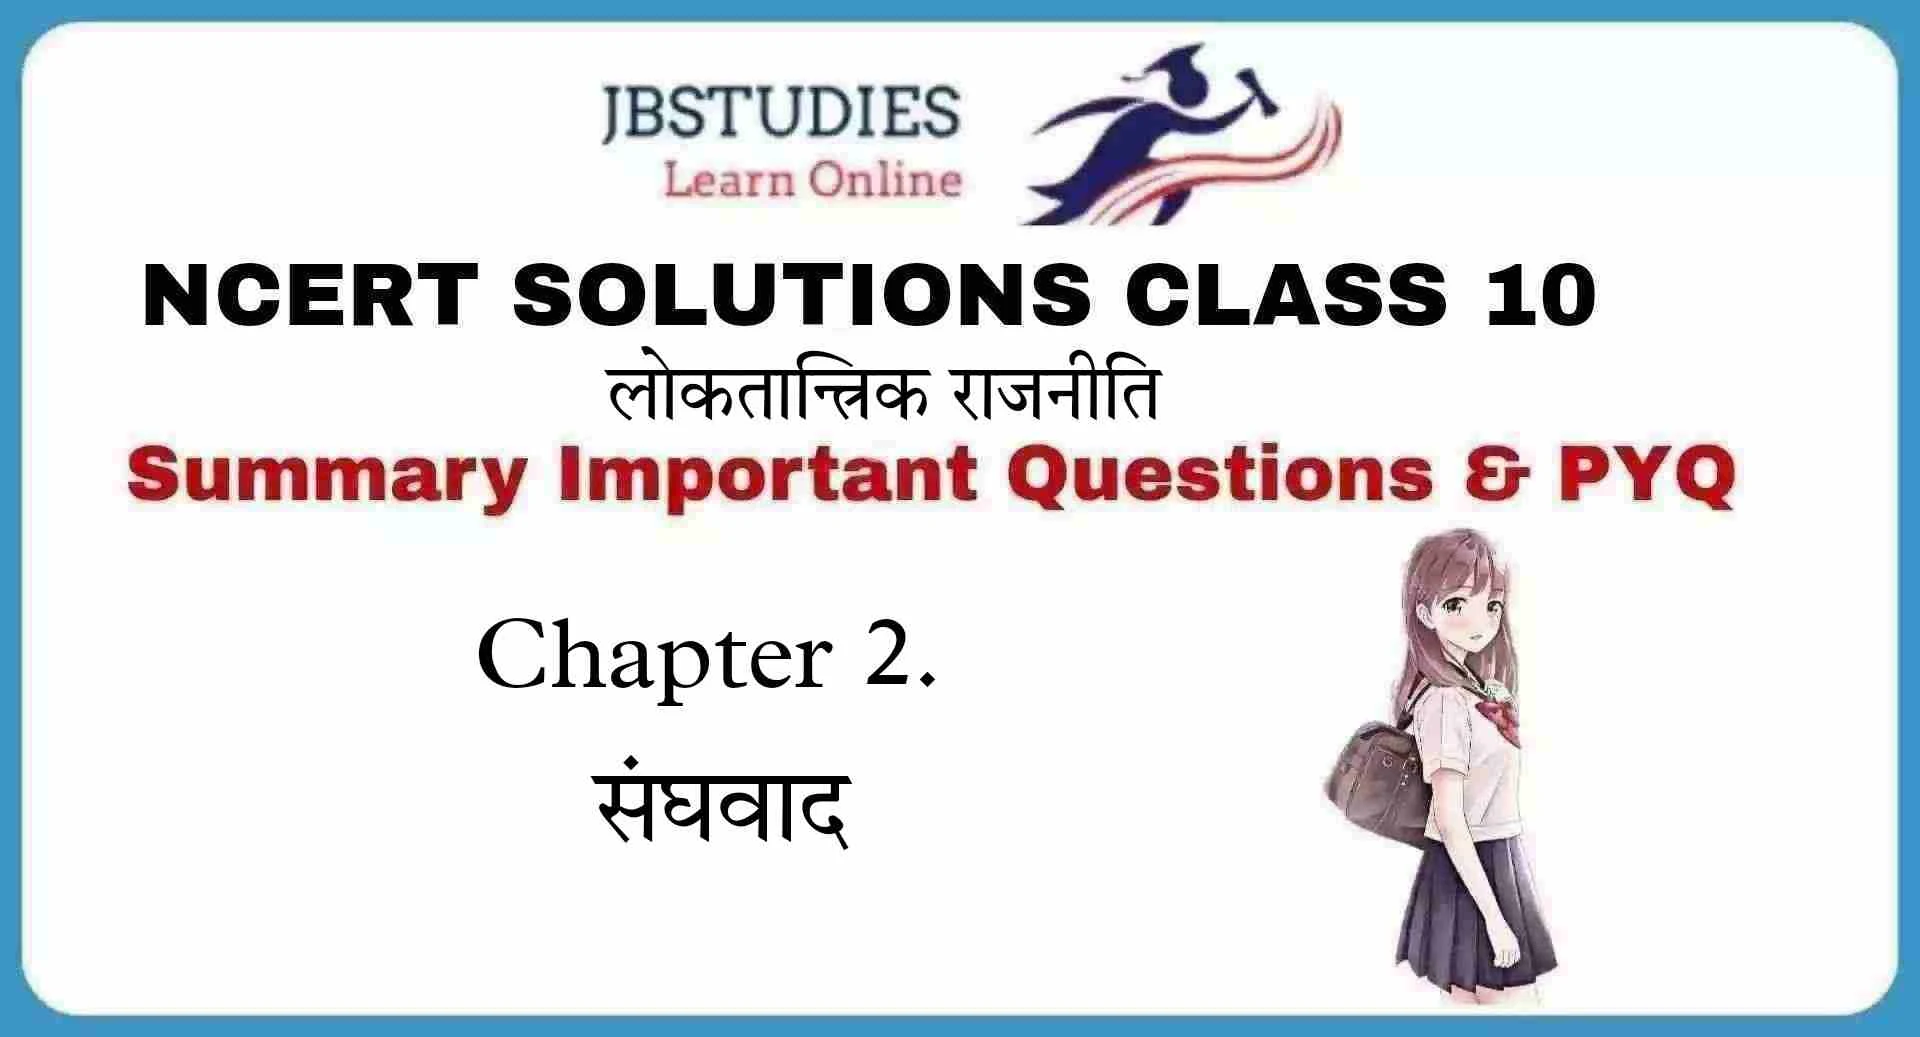 Solutions Class 10 लोकतान्त्रिक राजनीति Chapter-2 (संघवाद )